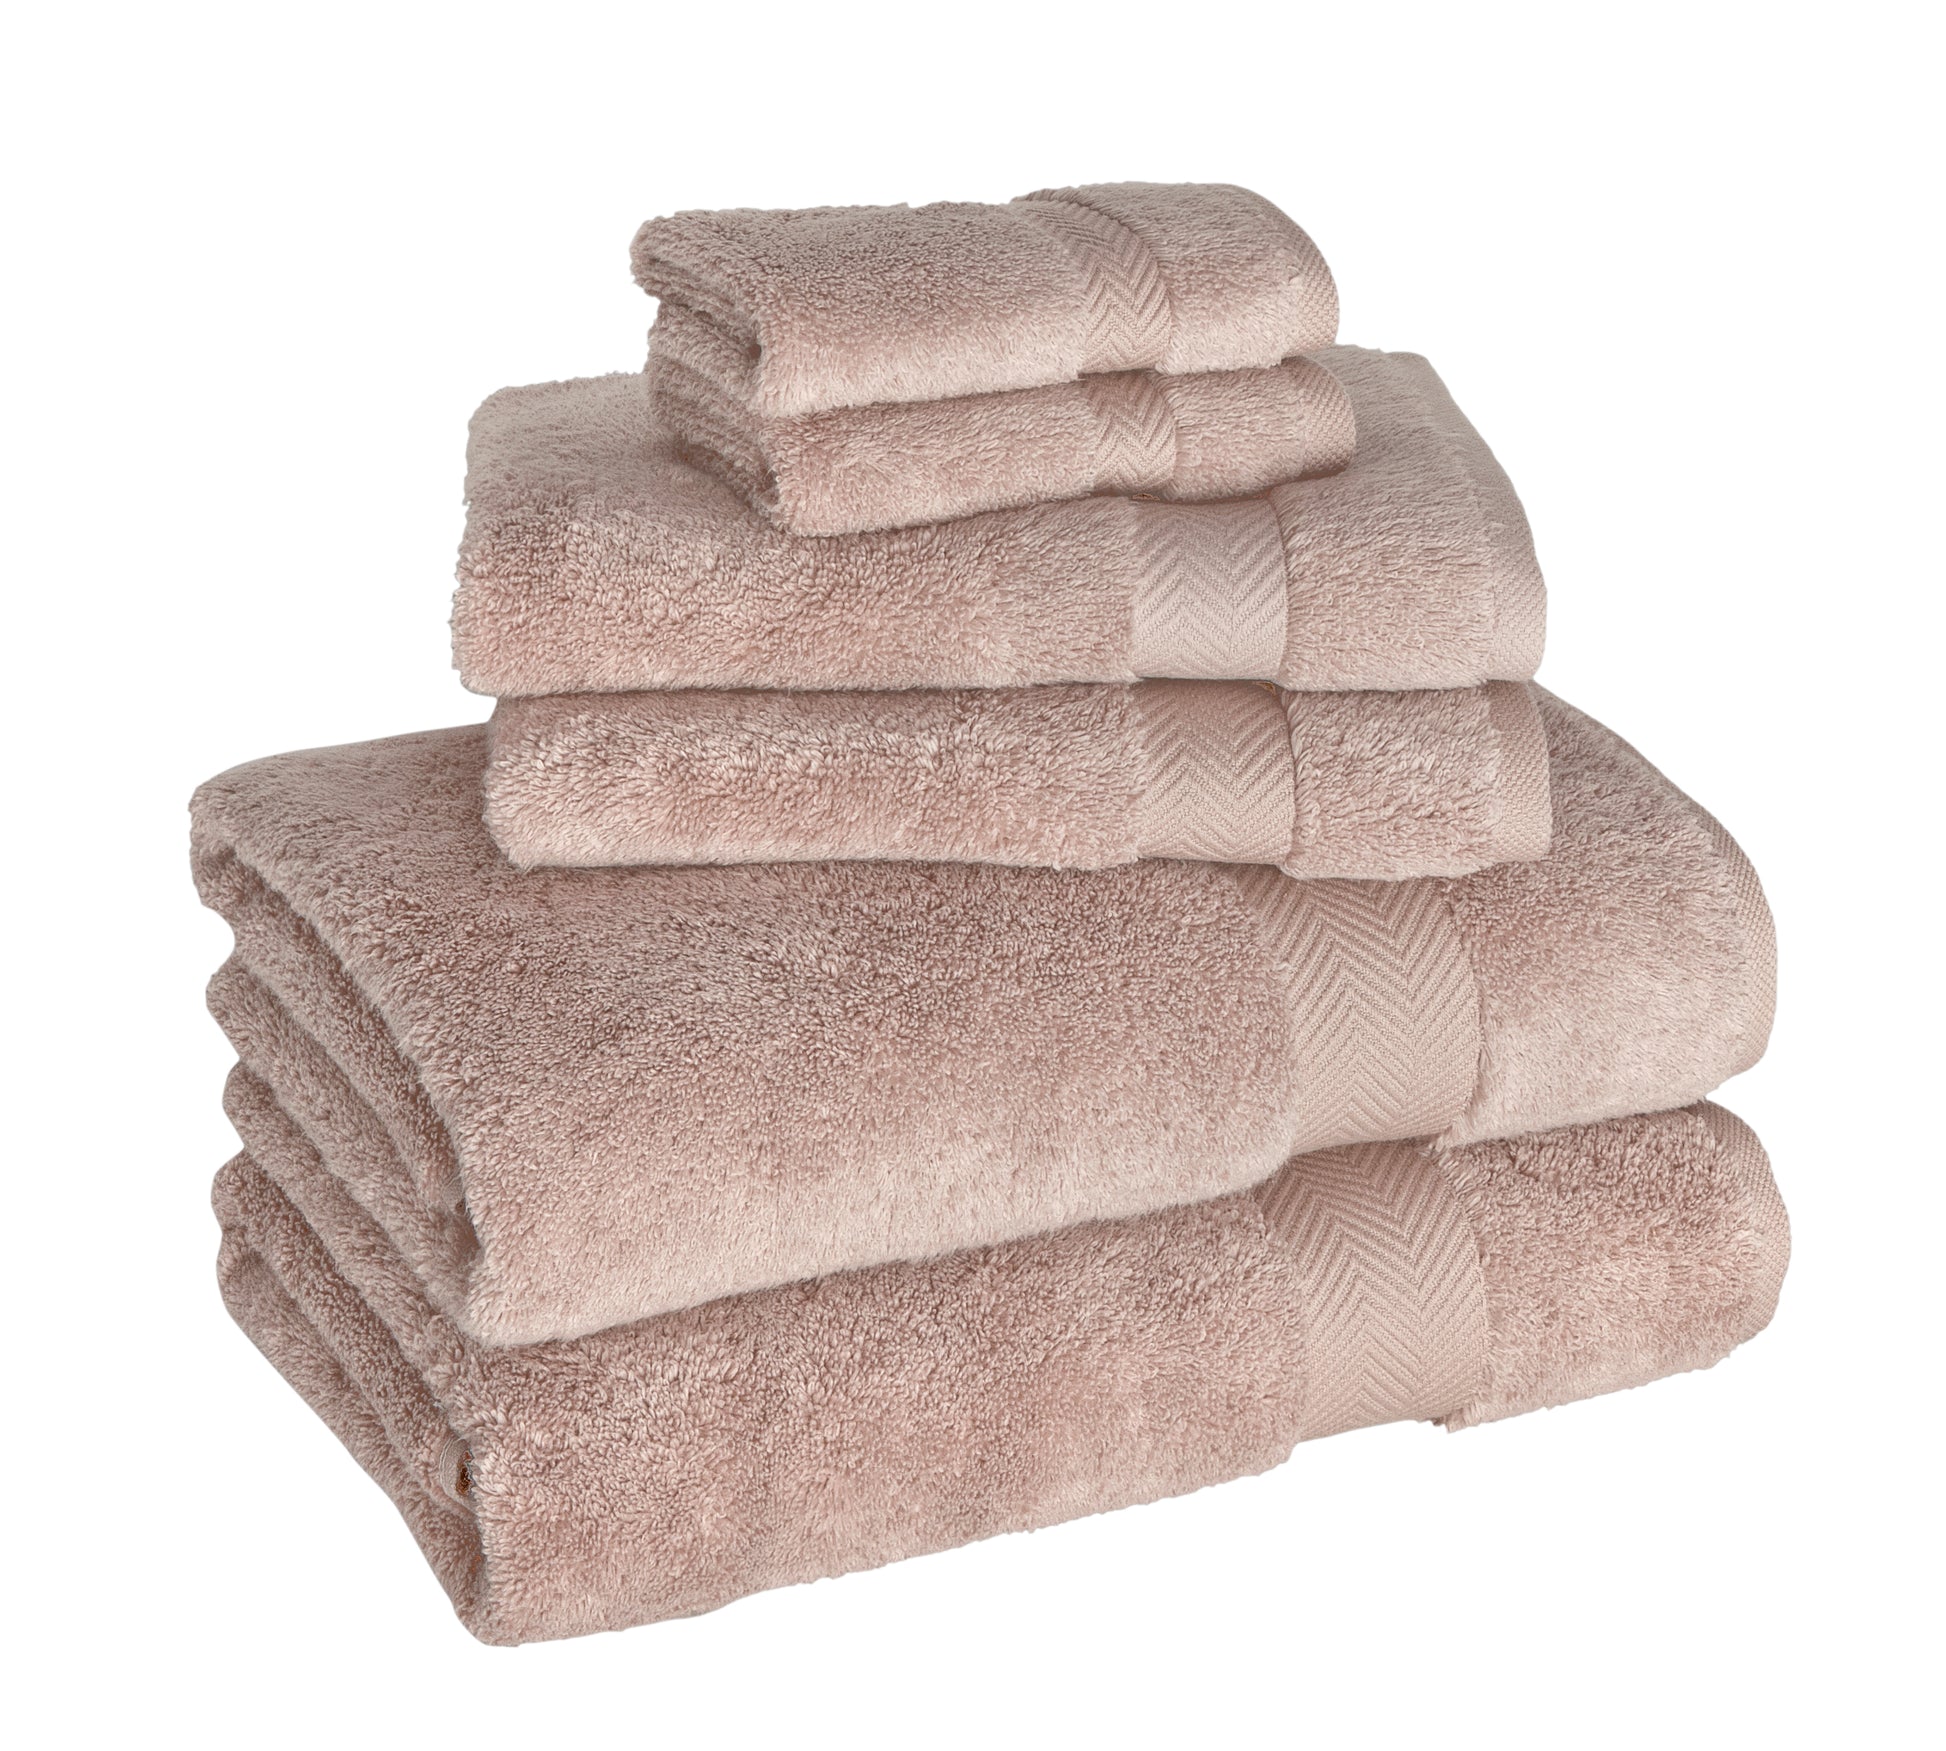 Becci Turkish Cotton Towel Set of 6 - Classic Turkish Towels